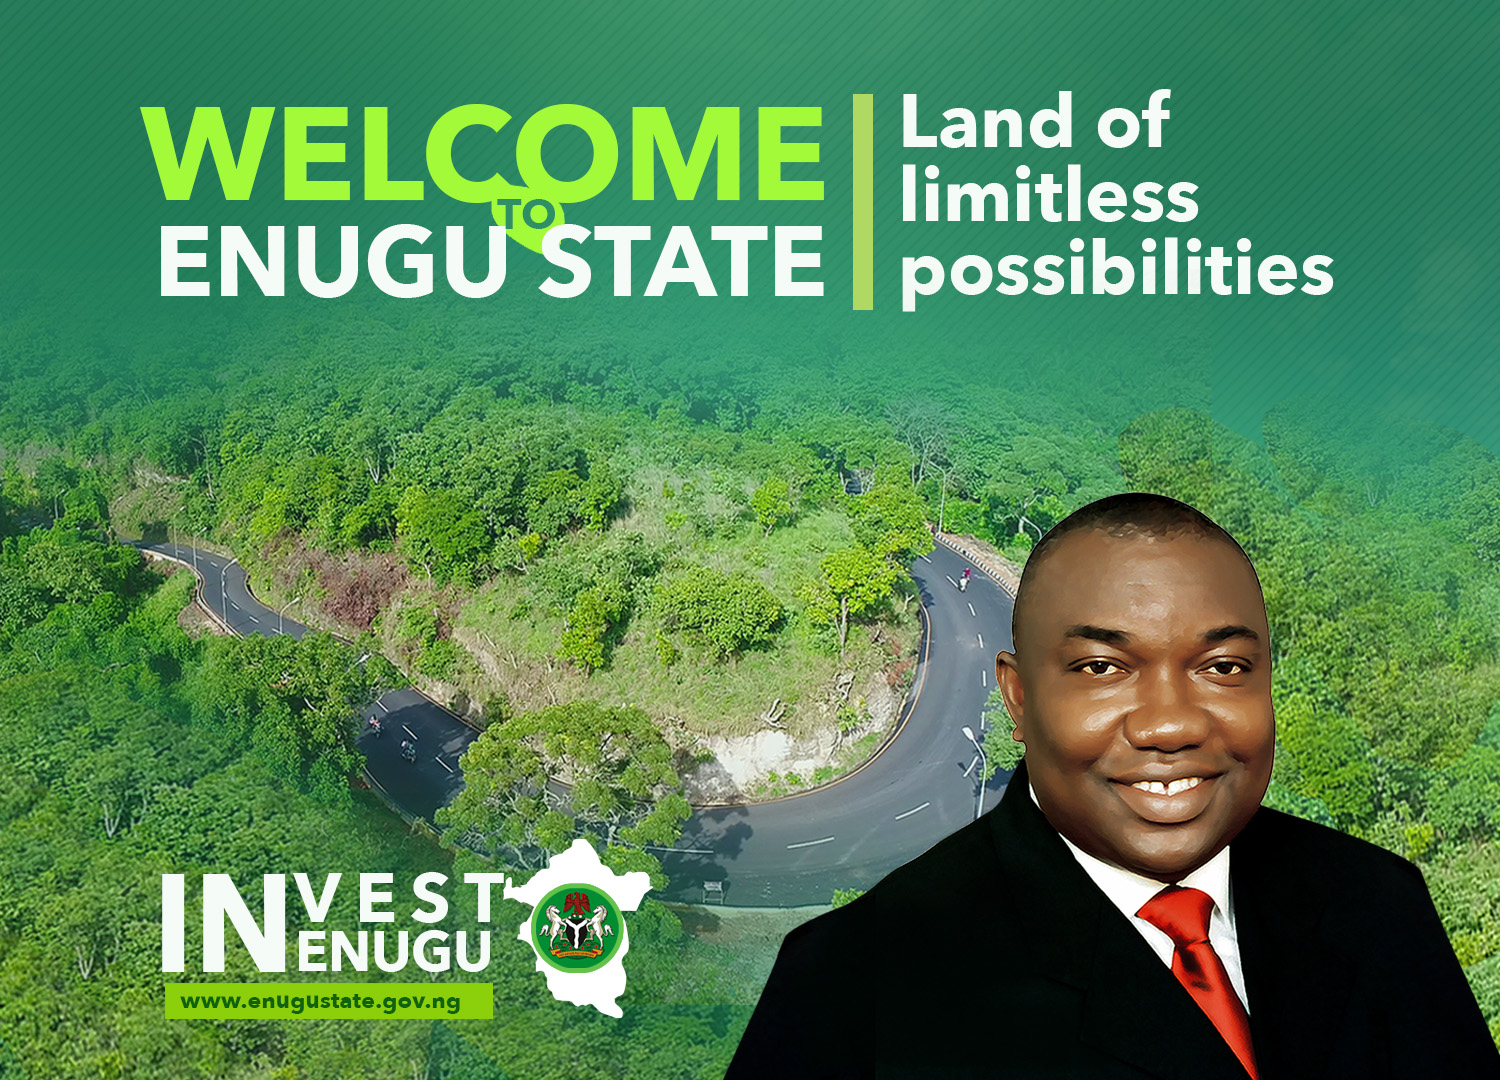 enugu-state-website-banner-designed-by-mexygabriel